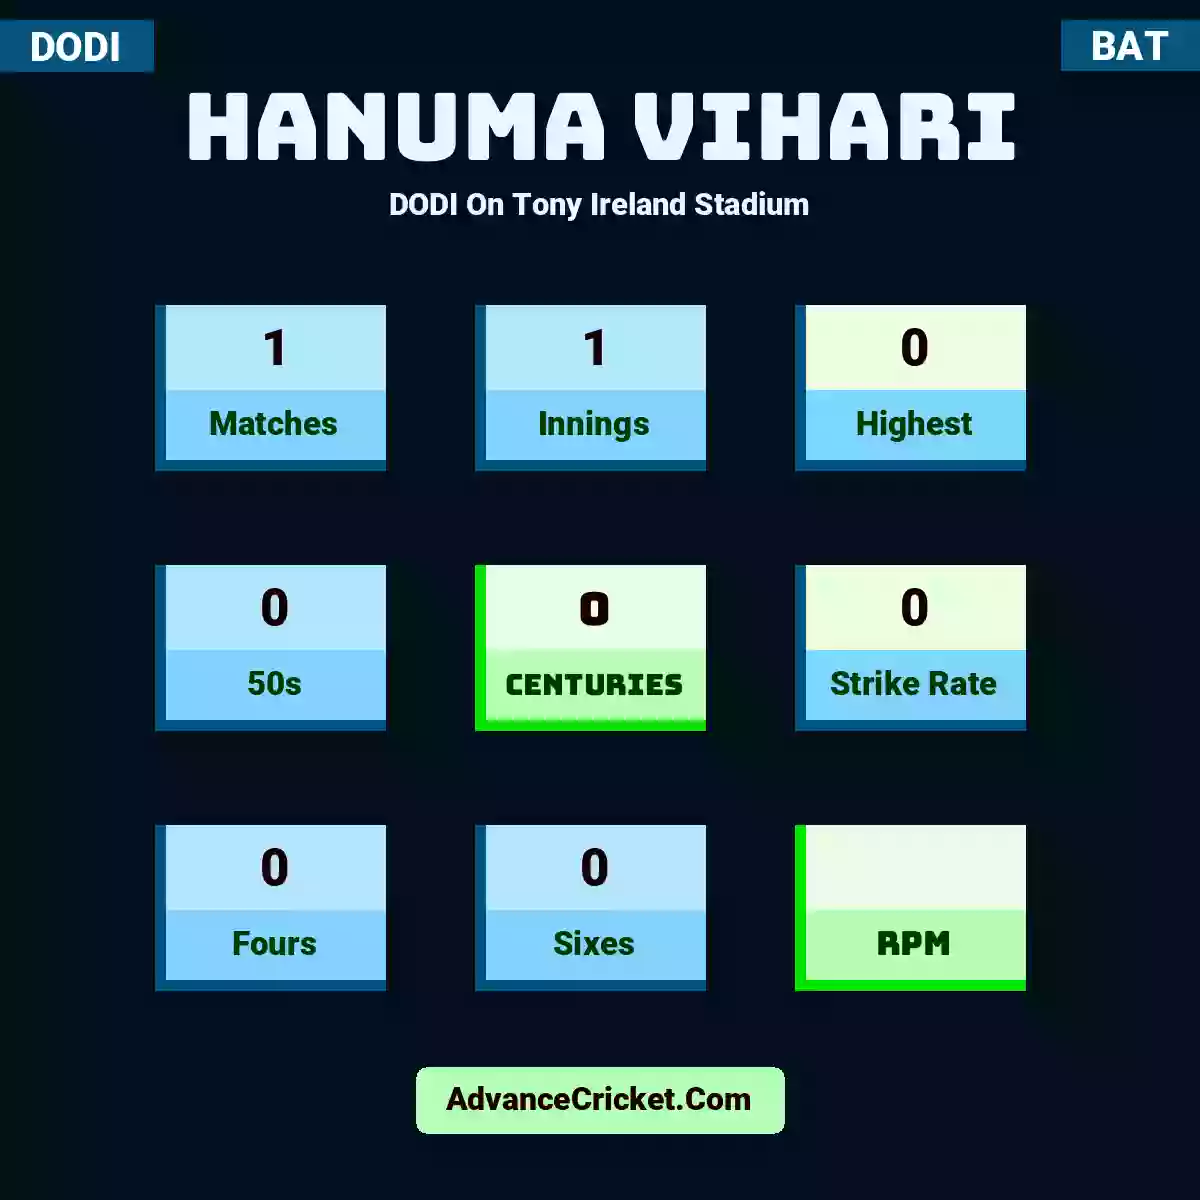 Hanuma Vihari DODI  On Tony Ireland Stadium, Hanuma Vihari played 1 matches, scored 0 runs as highest, 0 half-centuries, and 0 centuries, with a strike rate of 0. H.Vihari hit 0 fours and 0 sixes.